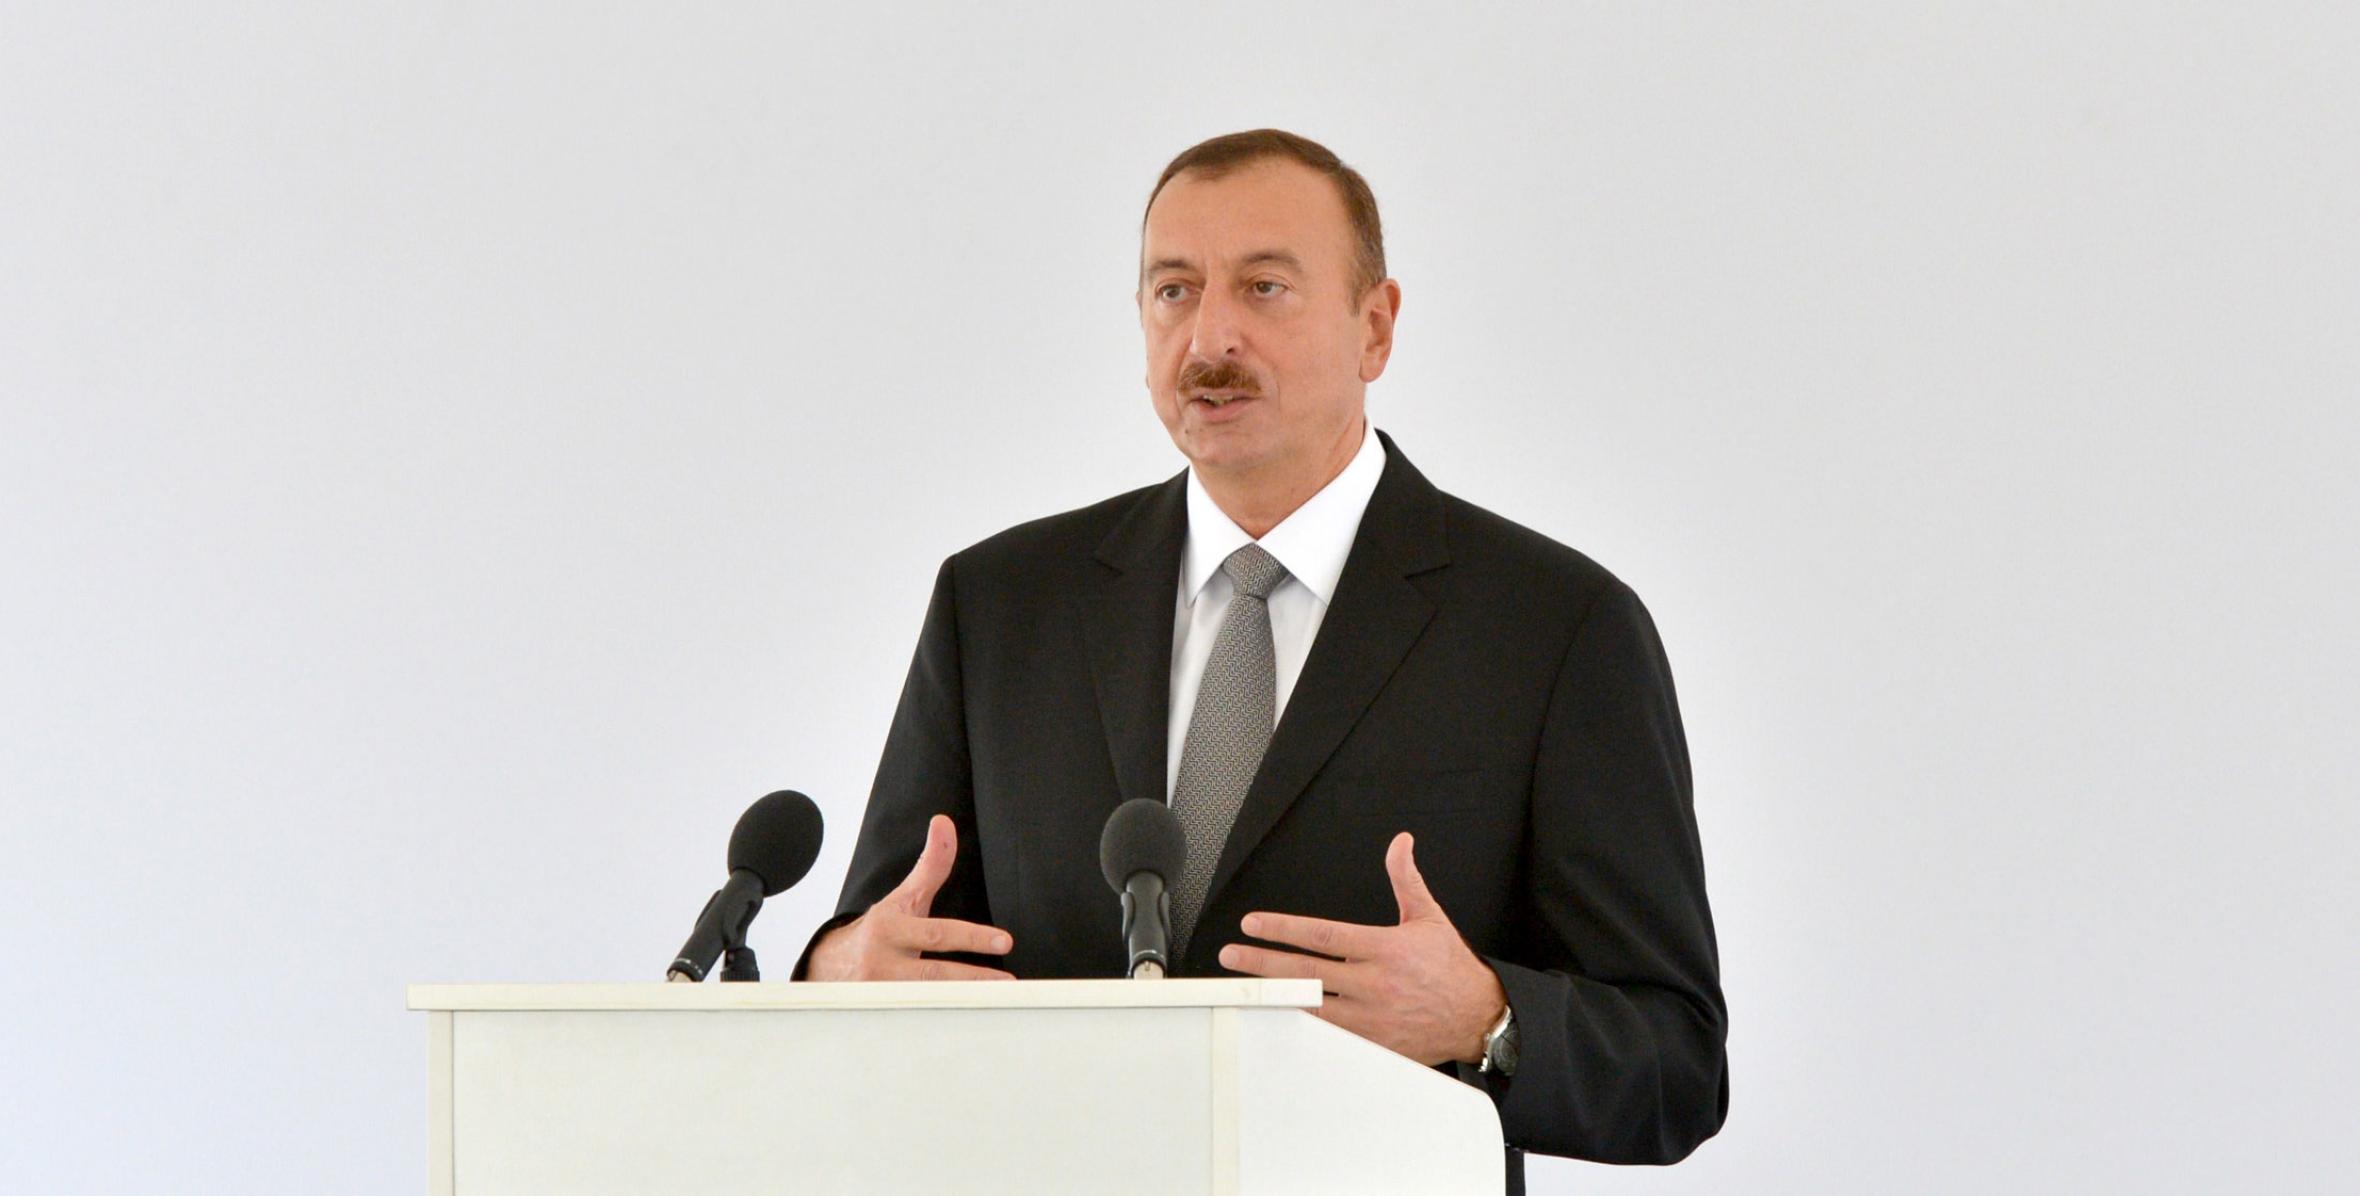 Speech by Ilham Aliyev at the opening ceremony of the Baku Shipyard